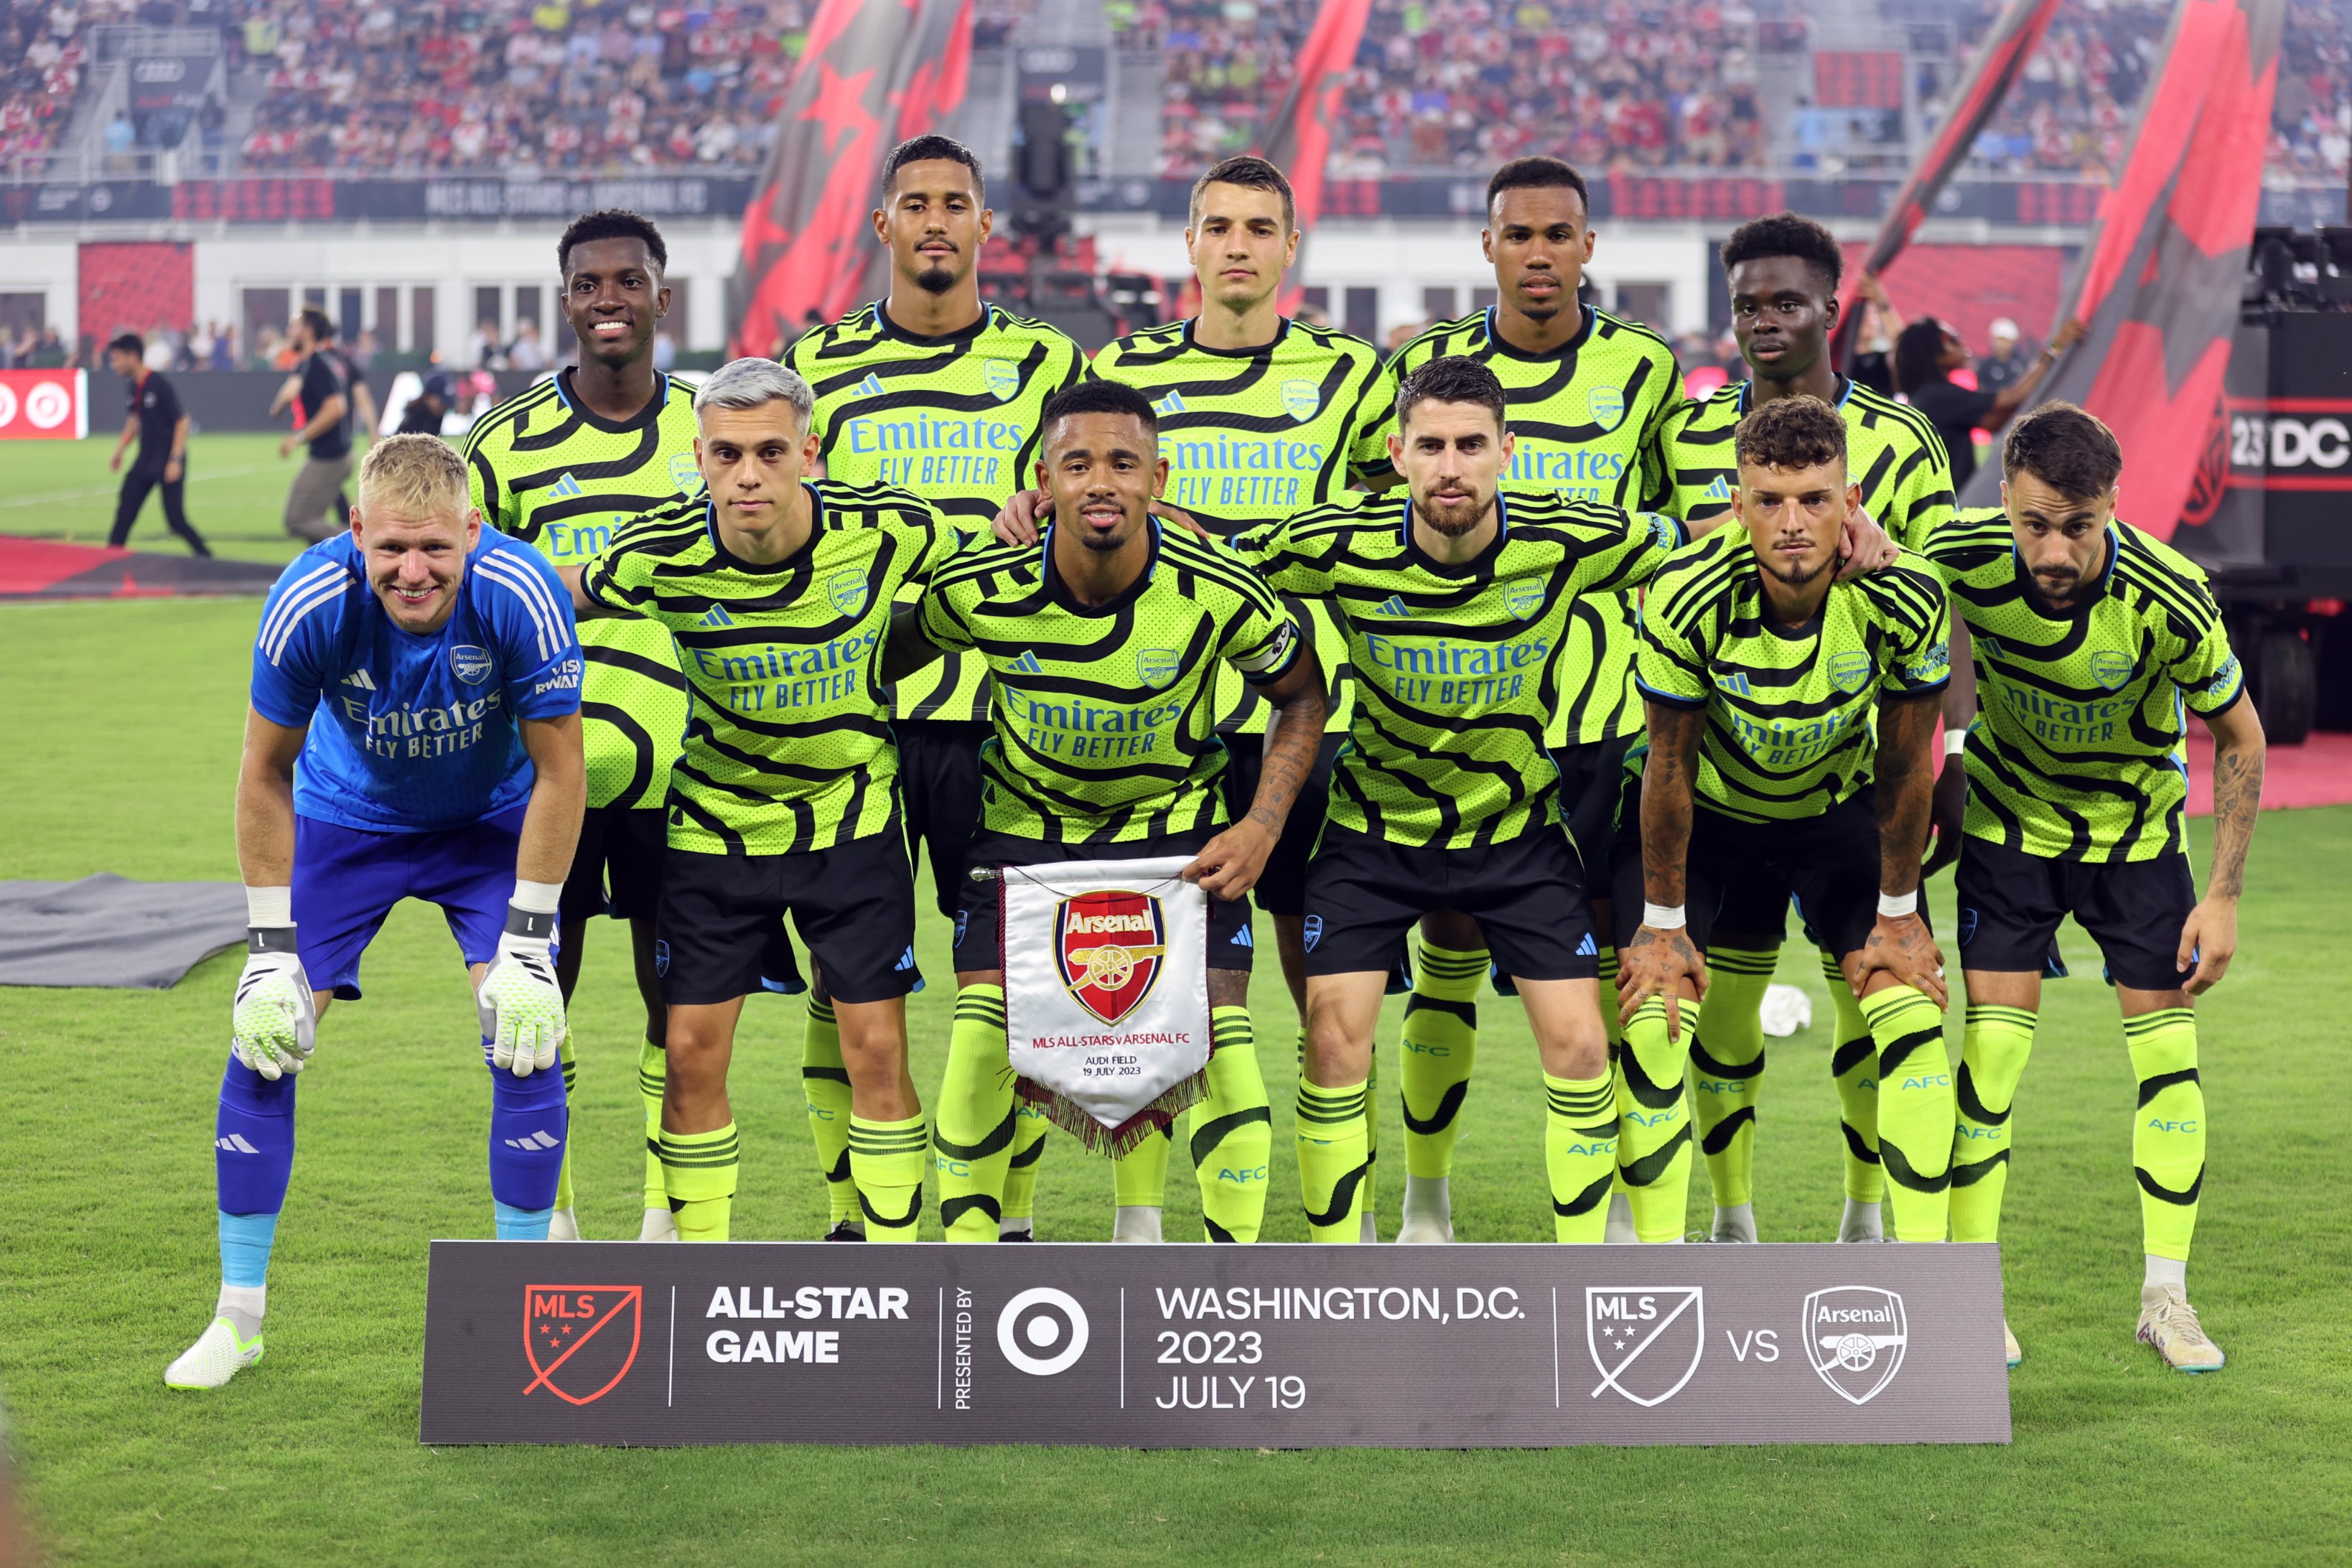 The Arsenal team pose ahead of kick-off.